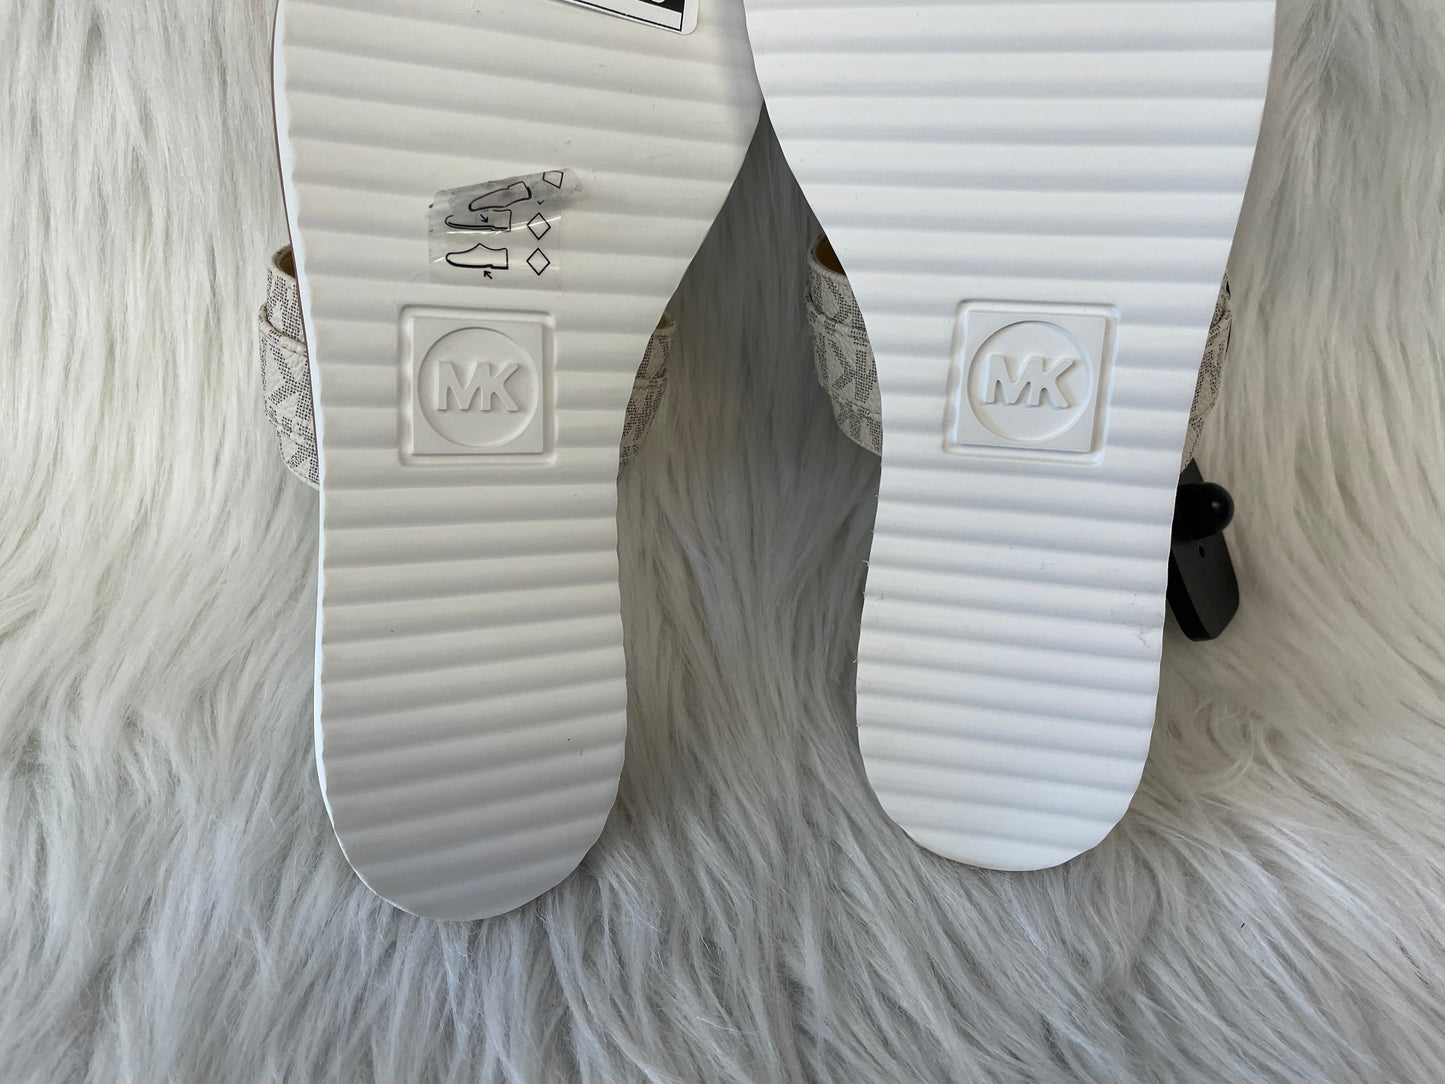 Gold & White Sandals Designer Michael By Michael Kors, Size 6.5